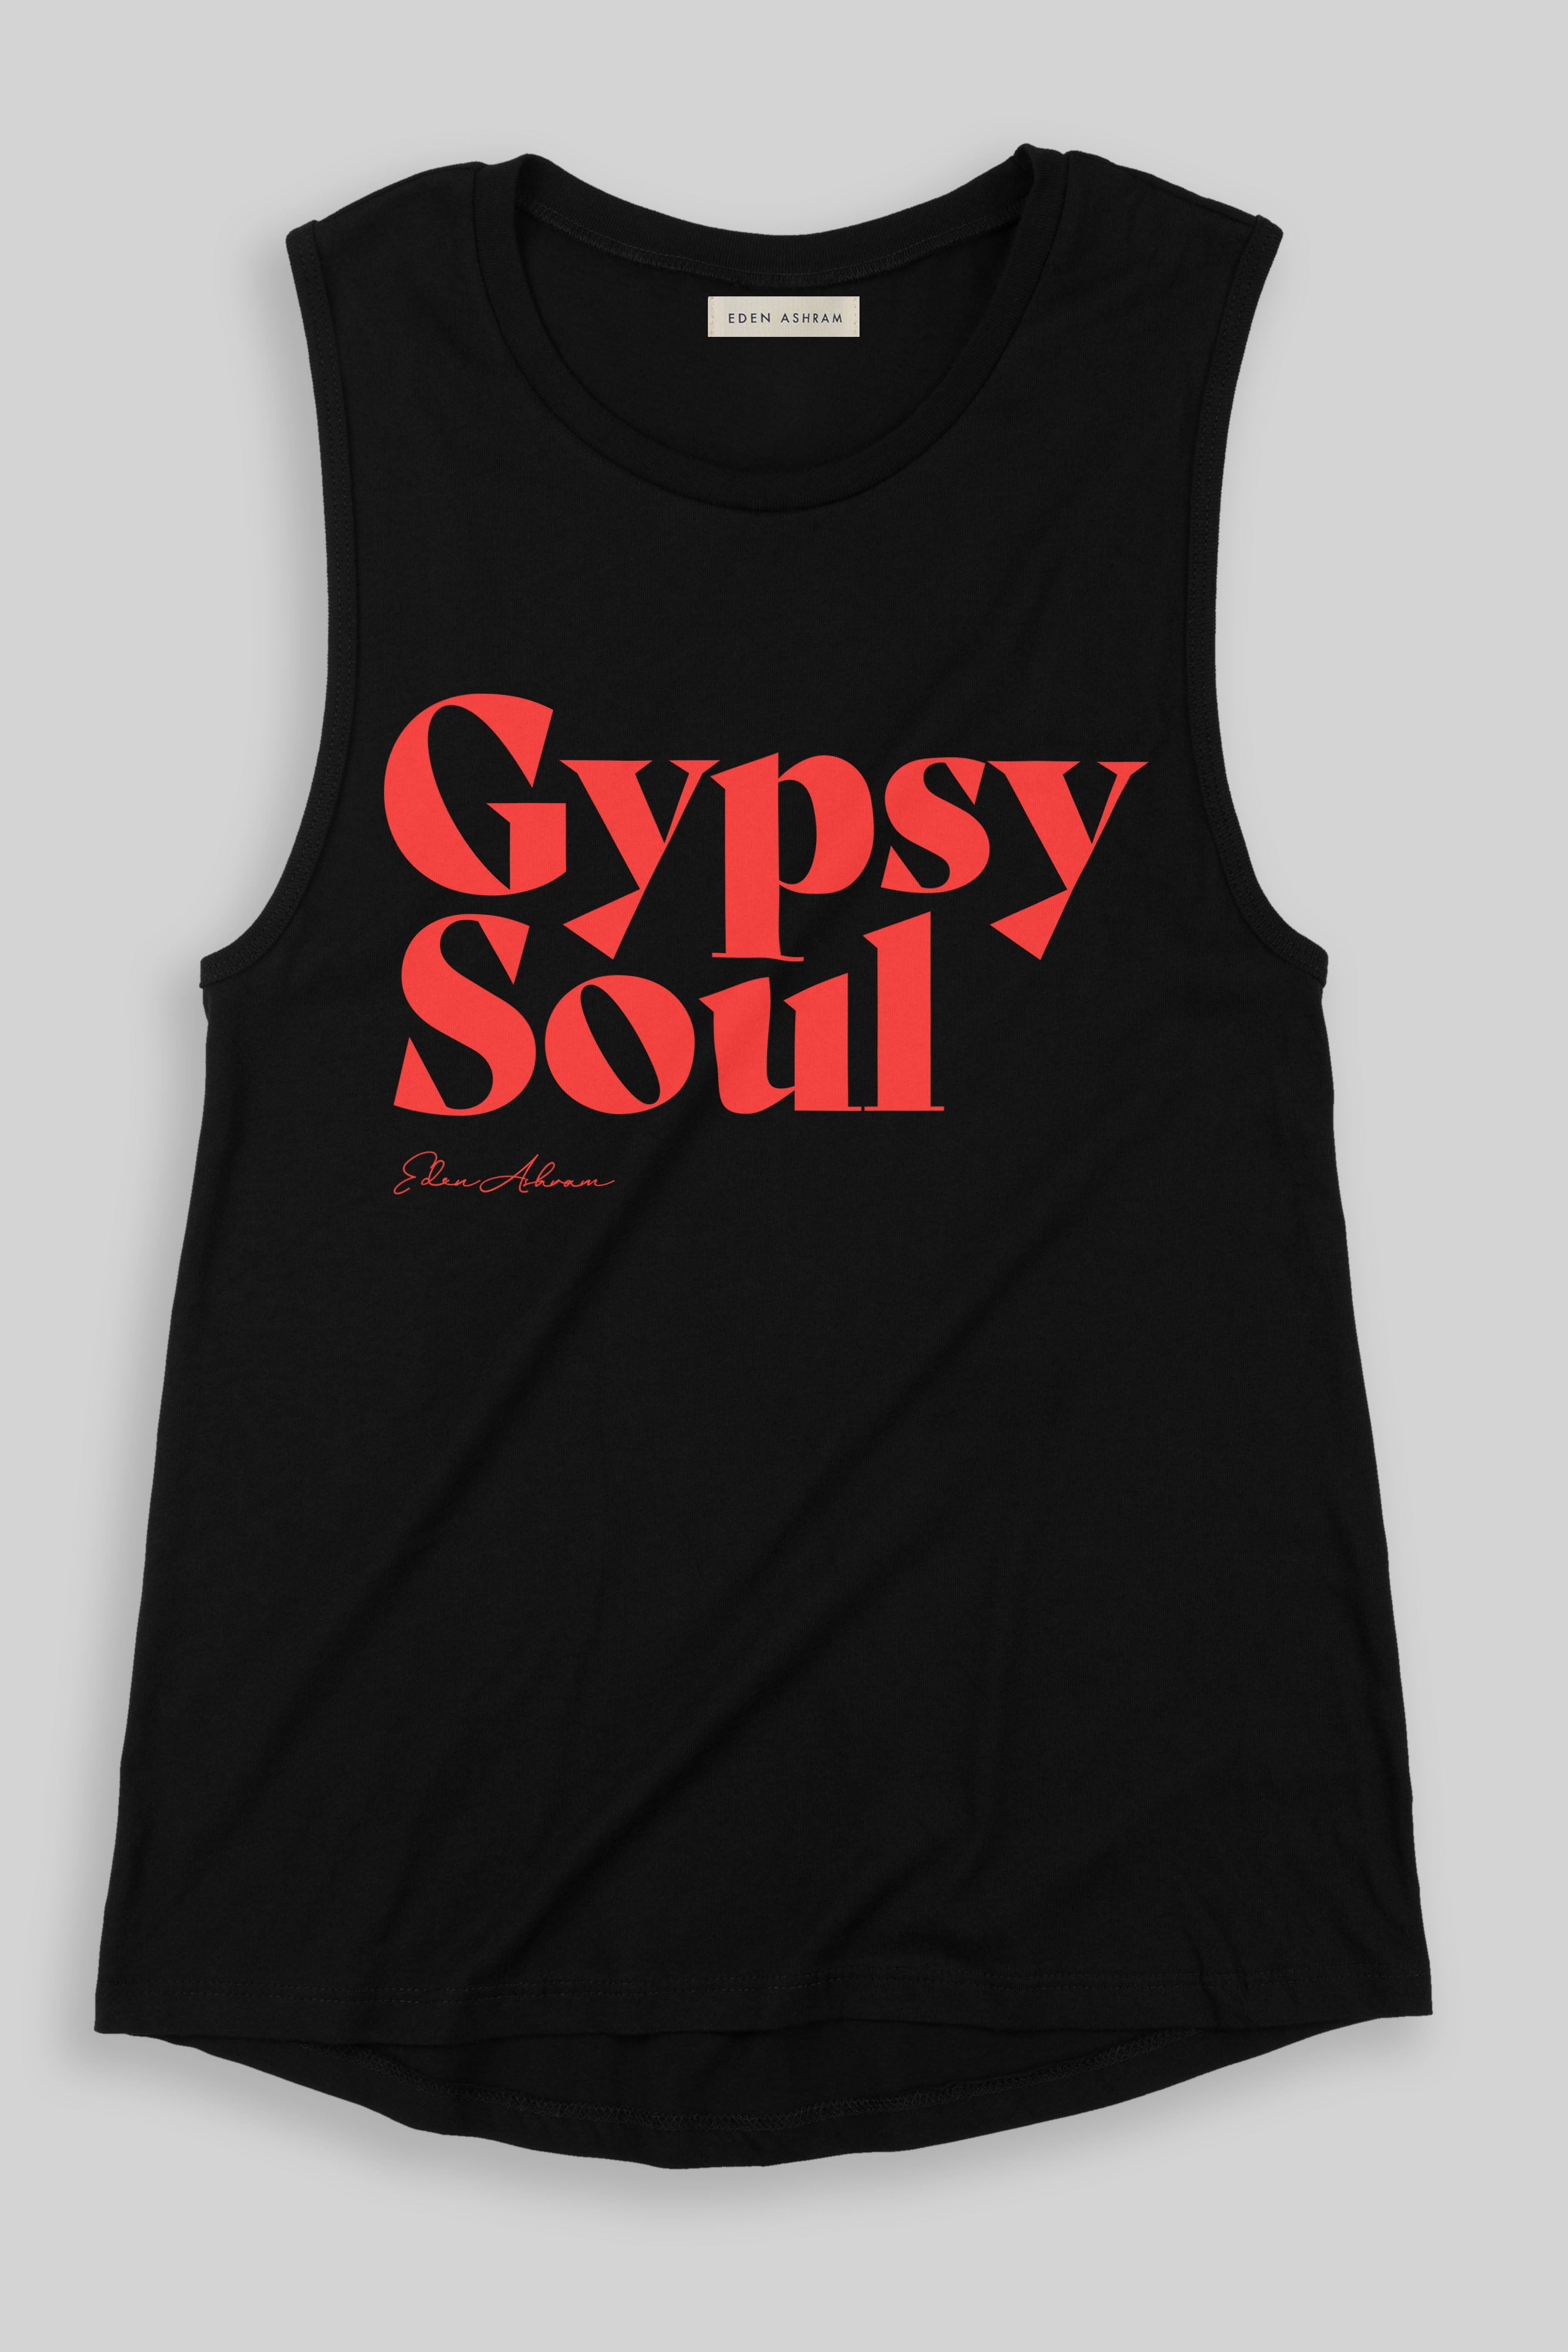 EDEN ASHRAM Gypsy Soul Jersey Muscle Tank Vintage Black